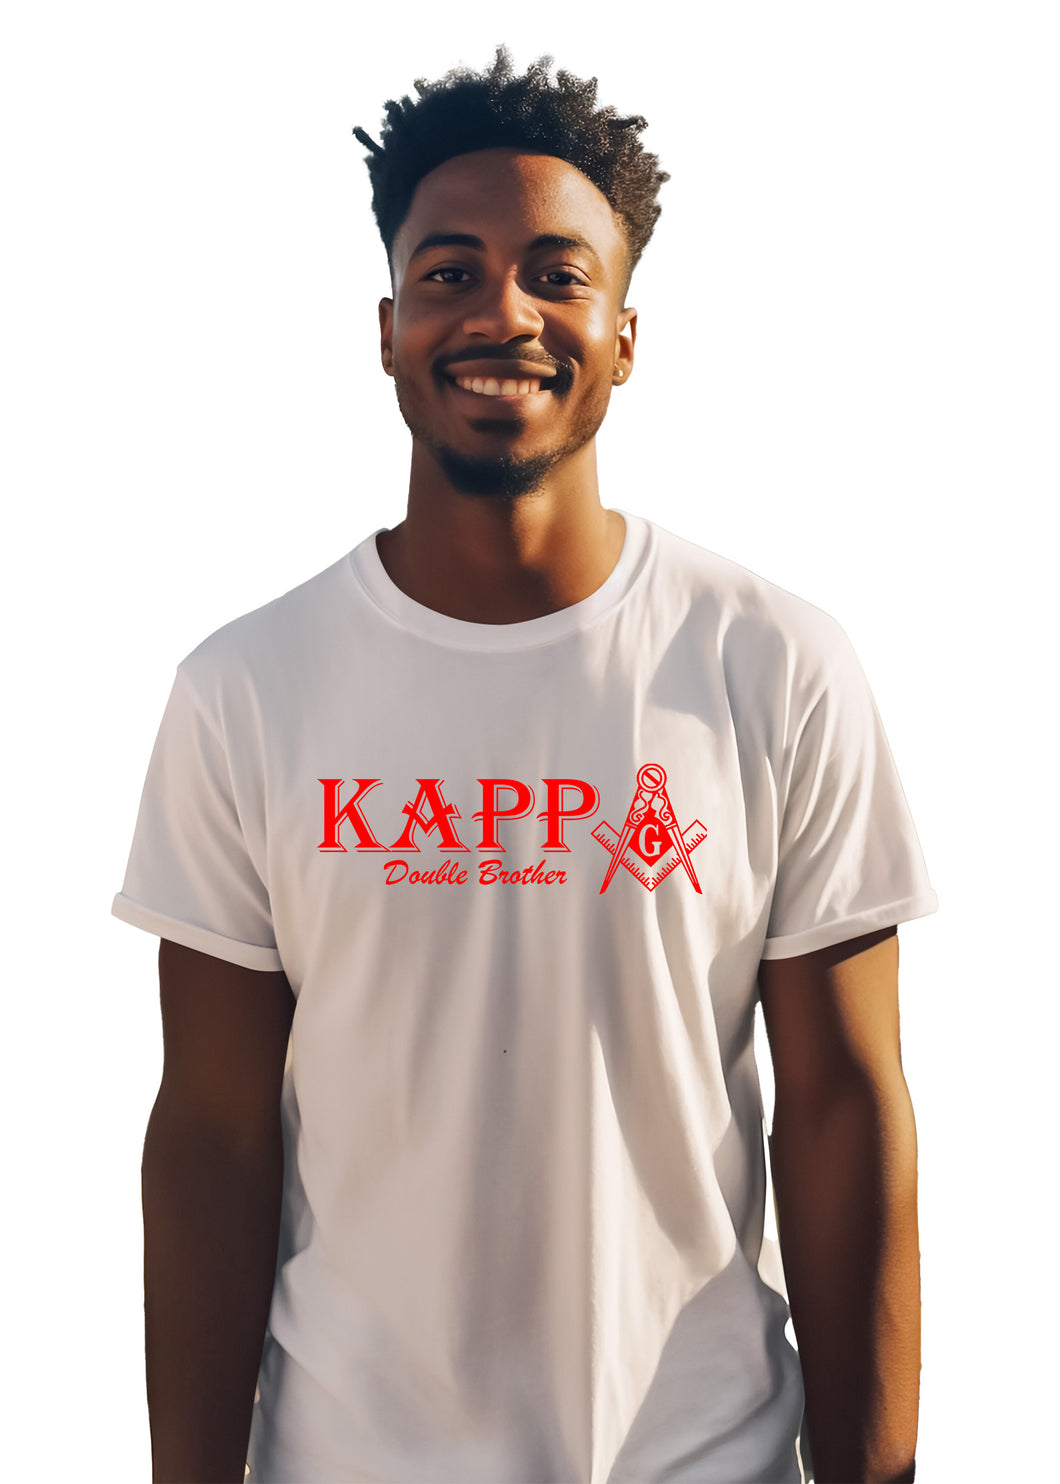 Kappa Double Brother White Shirt